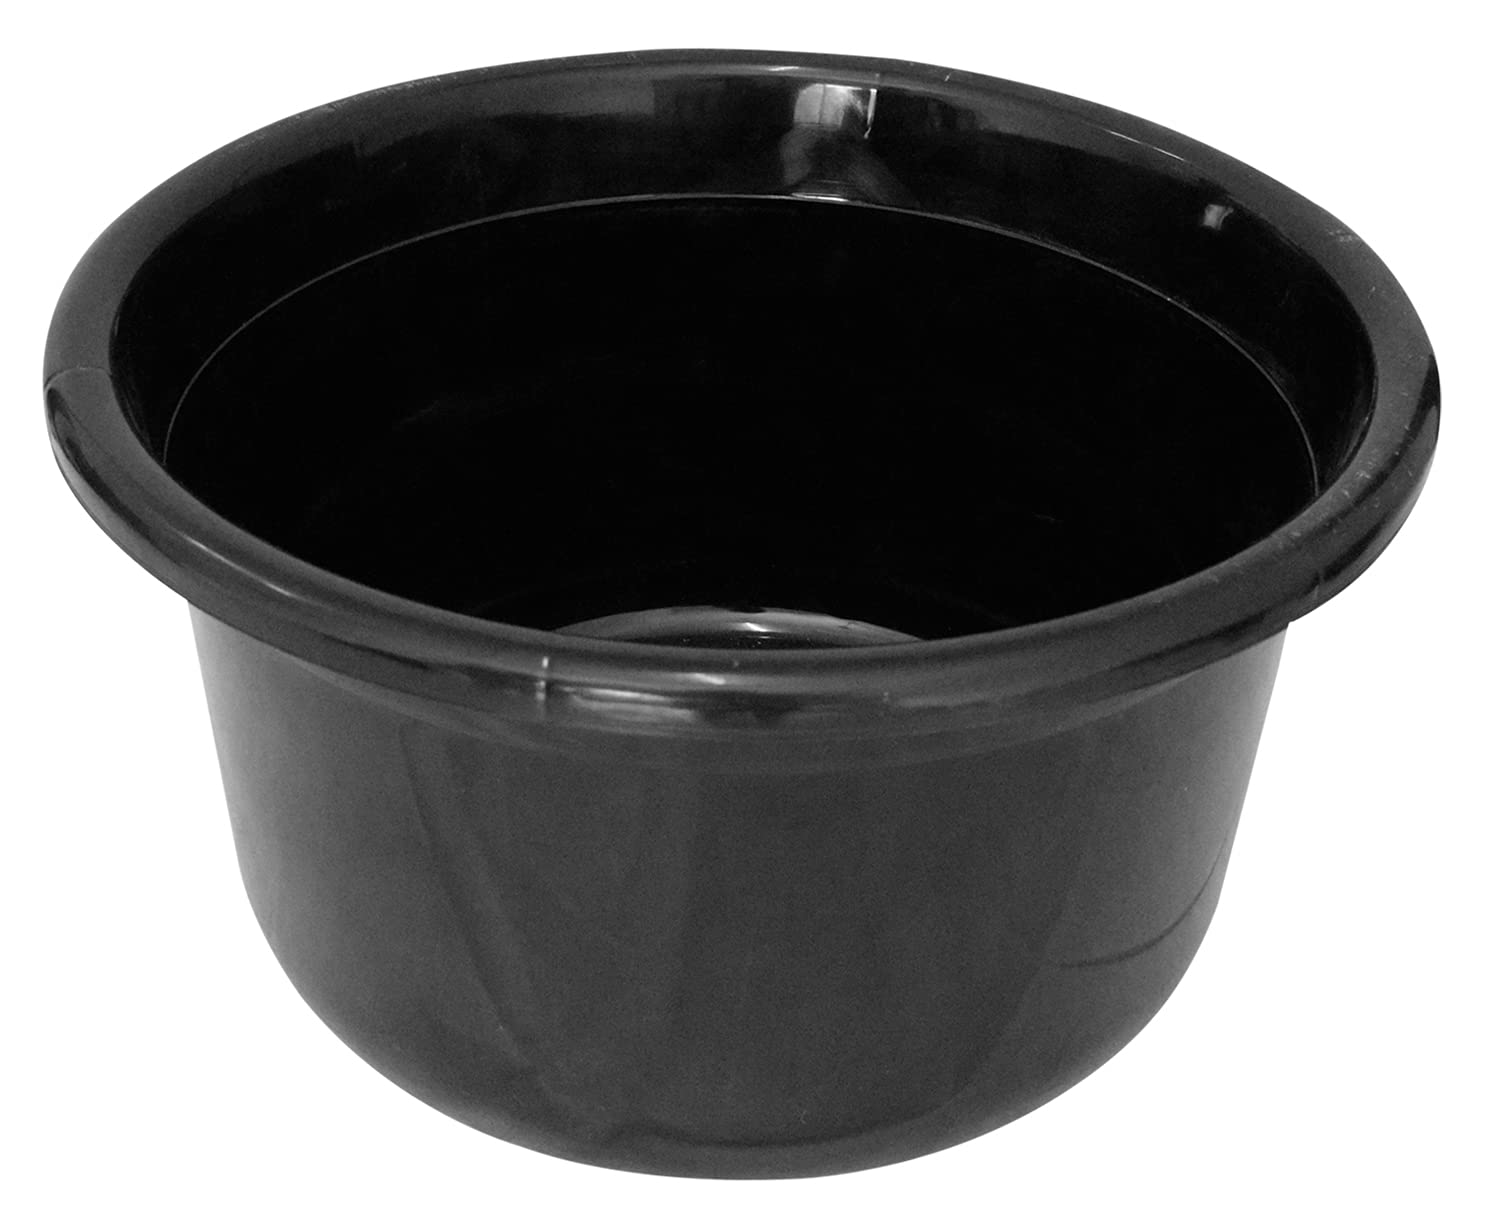 Kuber Industries 2 Pieces Unbreakable Virgin Plastic Multipurpose Bathroom Tub & Mug Set (Black)